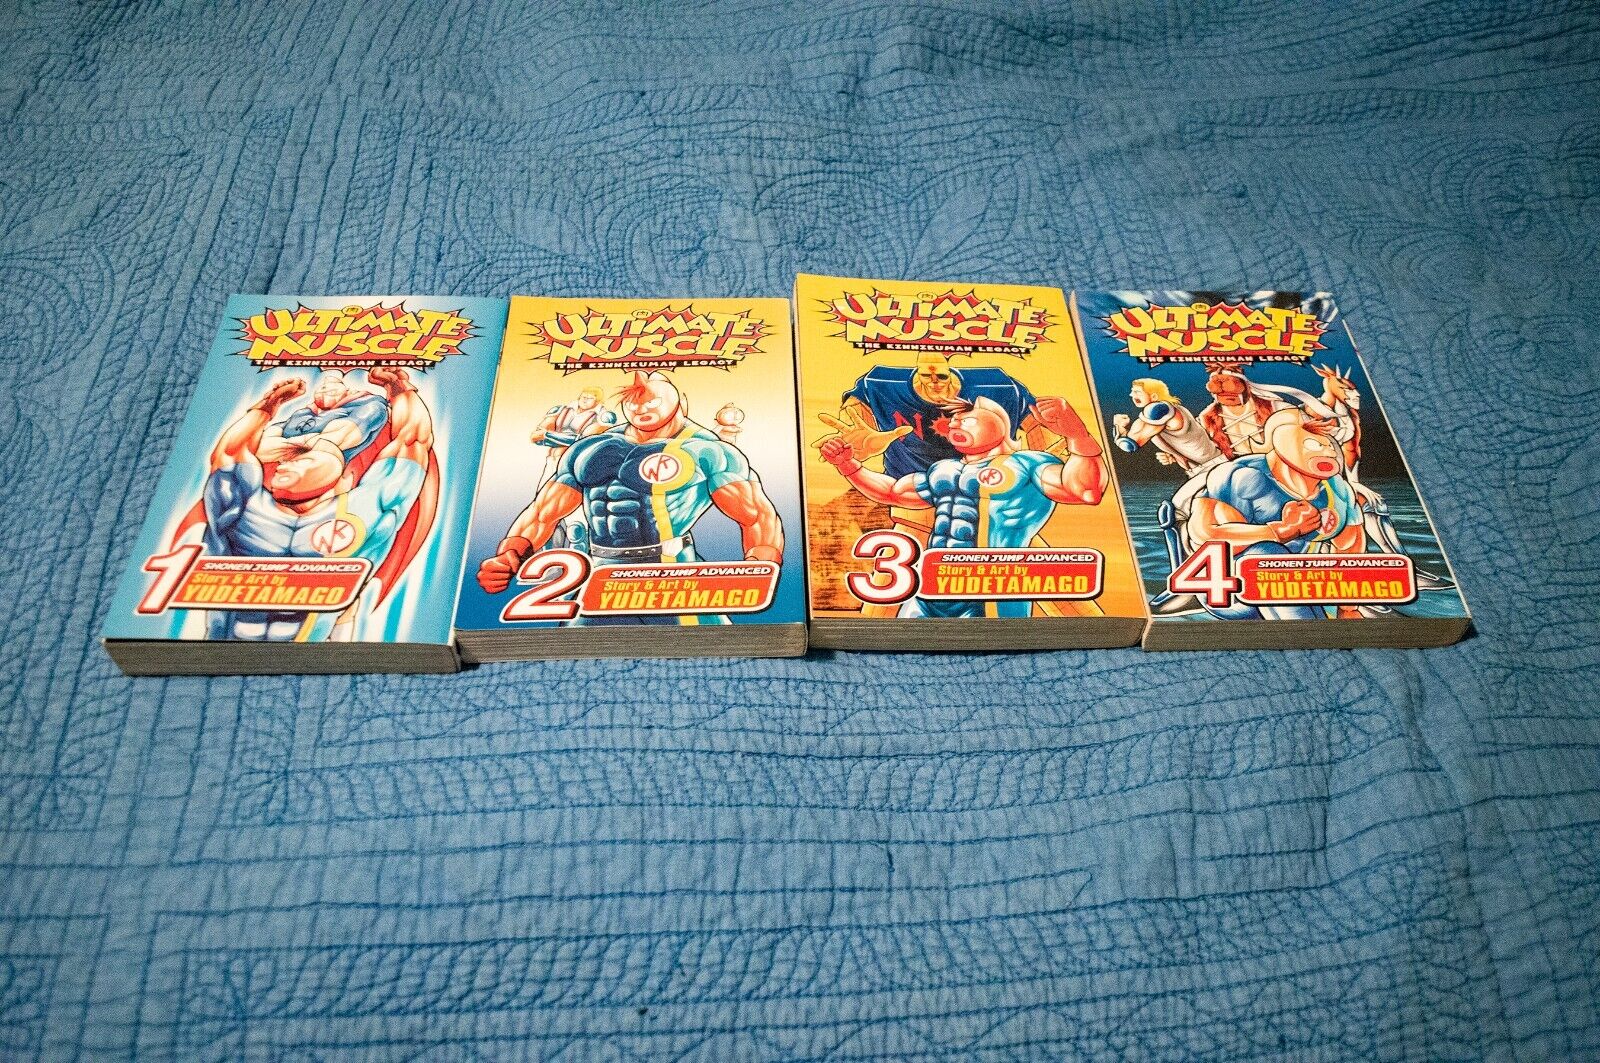 Ultimate Muscle Manga Volumes 1-4 by Yudetamag VIZ Media - Good Condition